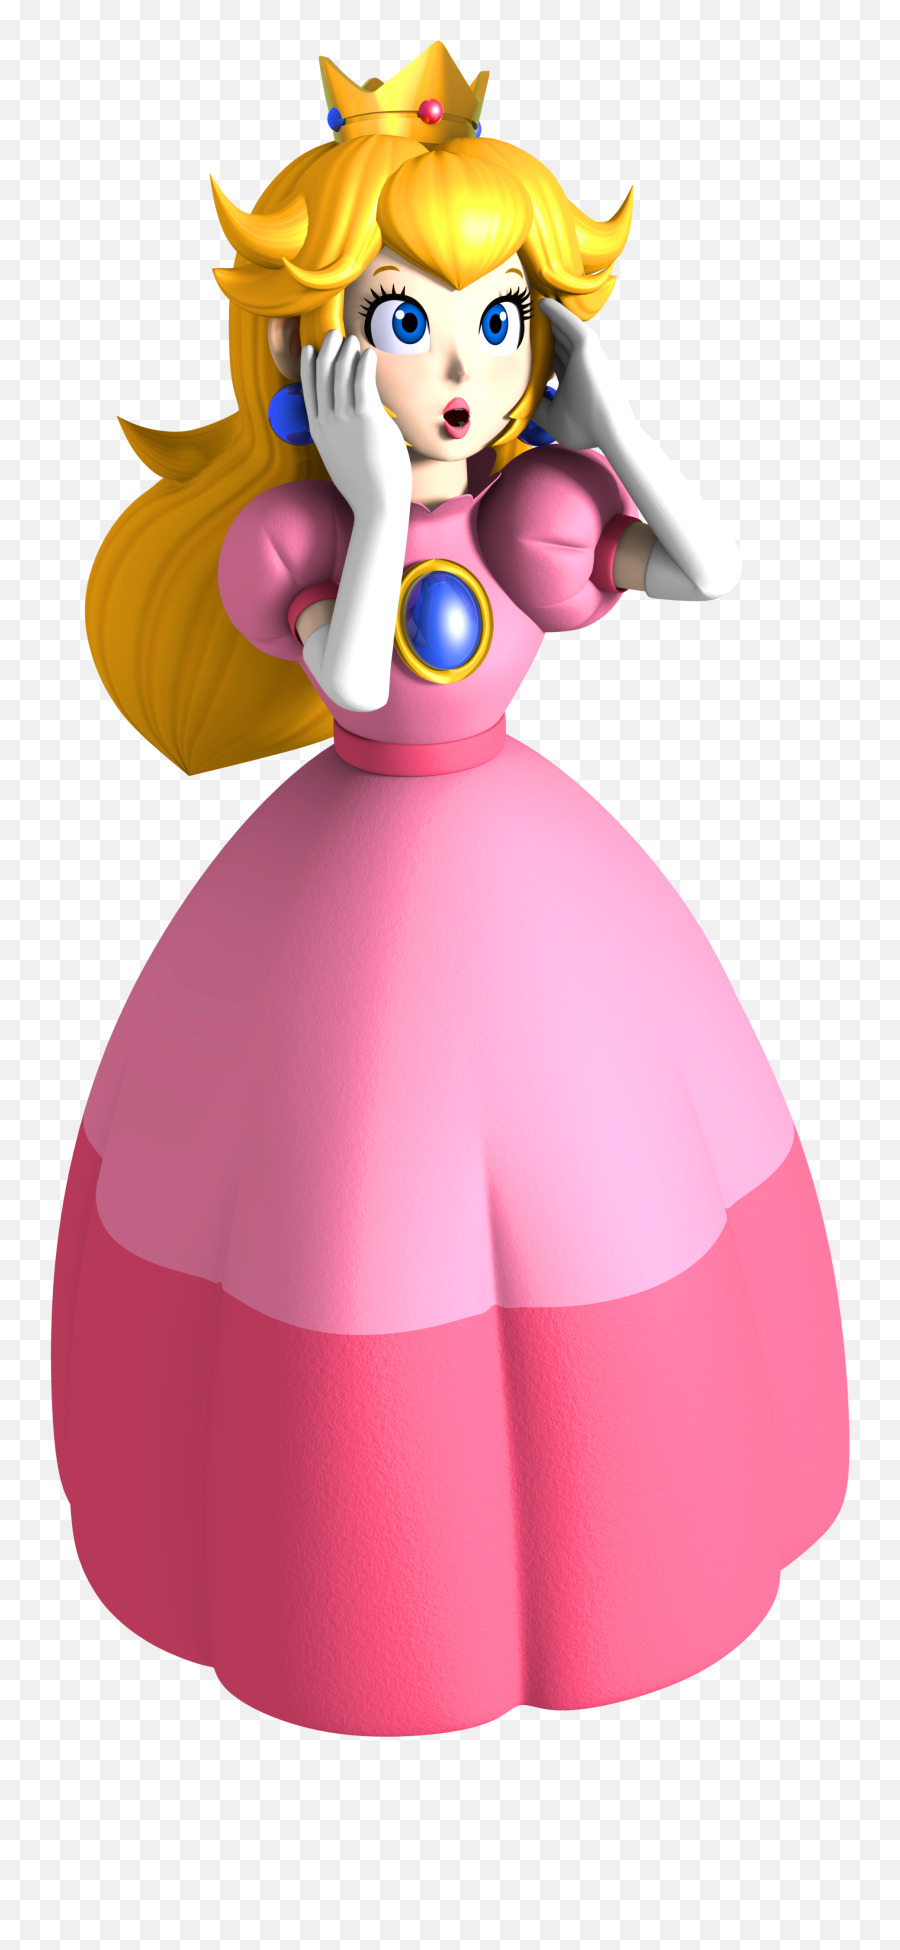 Mp3 - Peach Princess Peach 64 Full Size Png Download Seekpng Peach Mario 64,Princess Peach Png